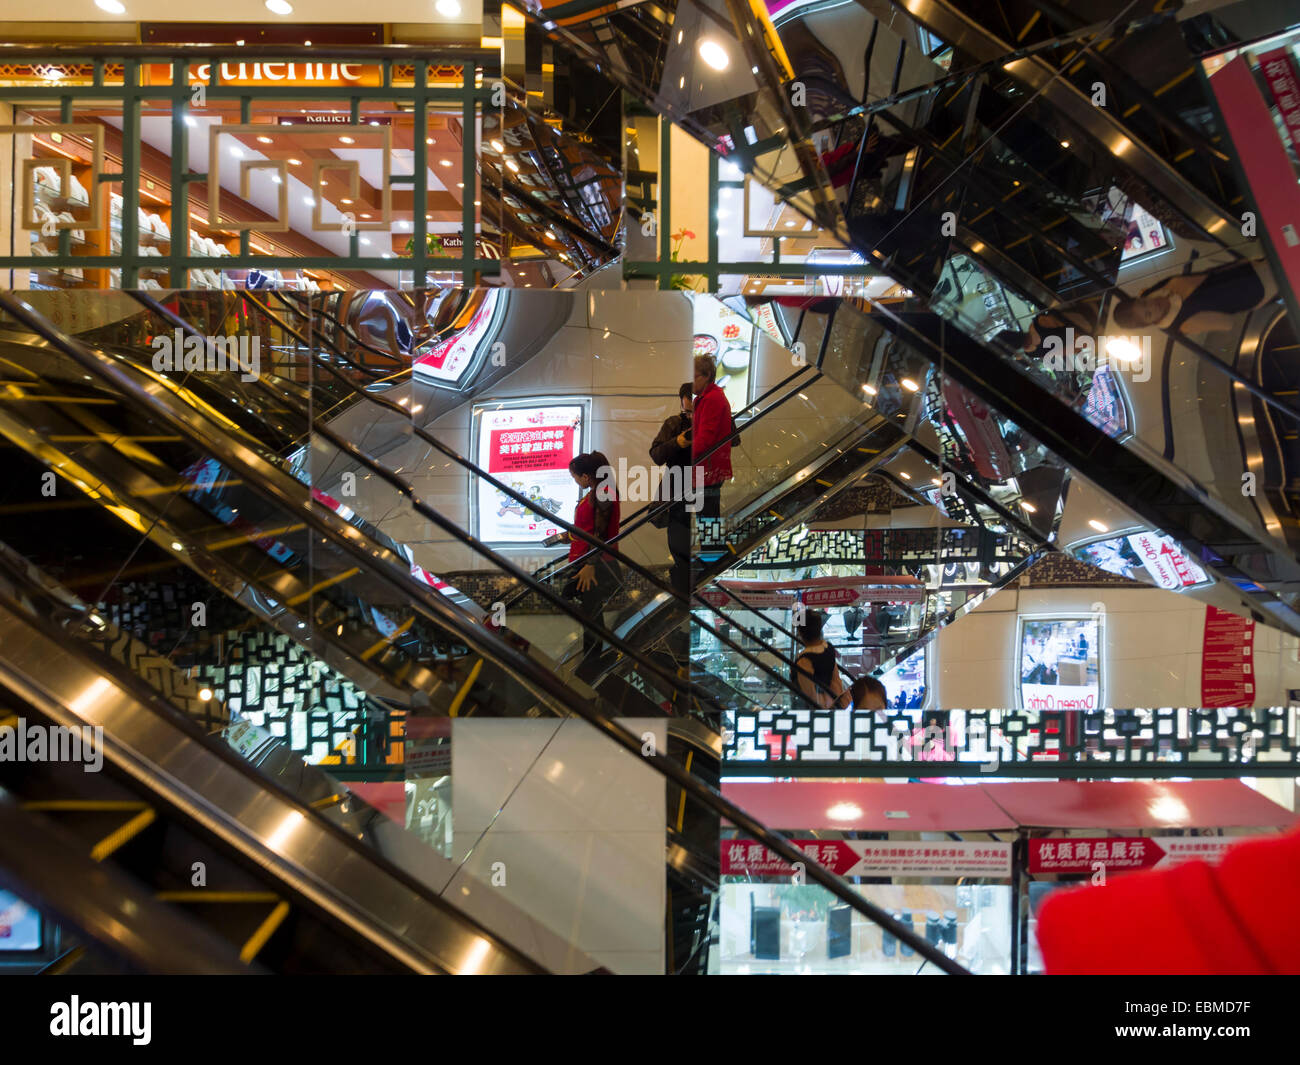 Strada Di seta shopping mall di Pechino, Cina, Asia Foto Stock